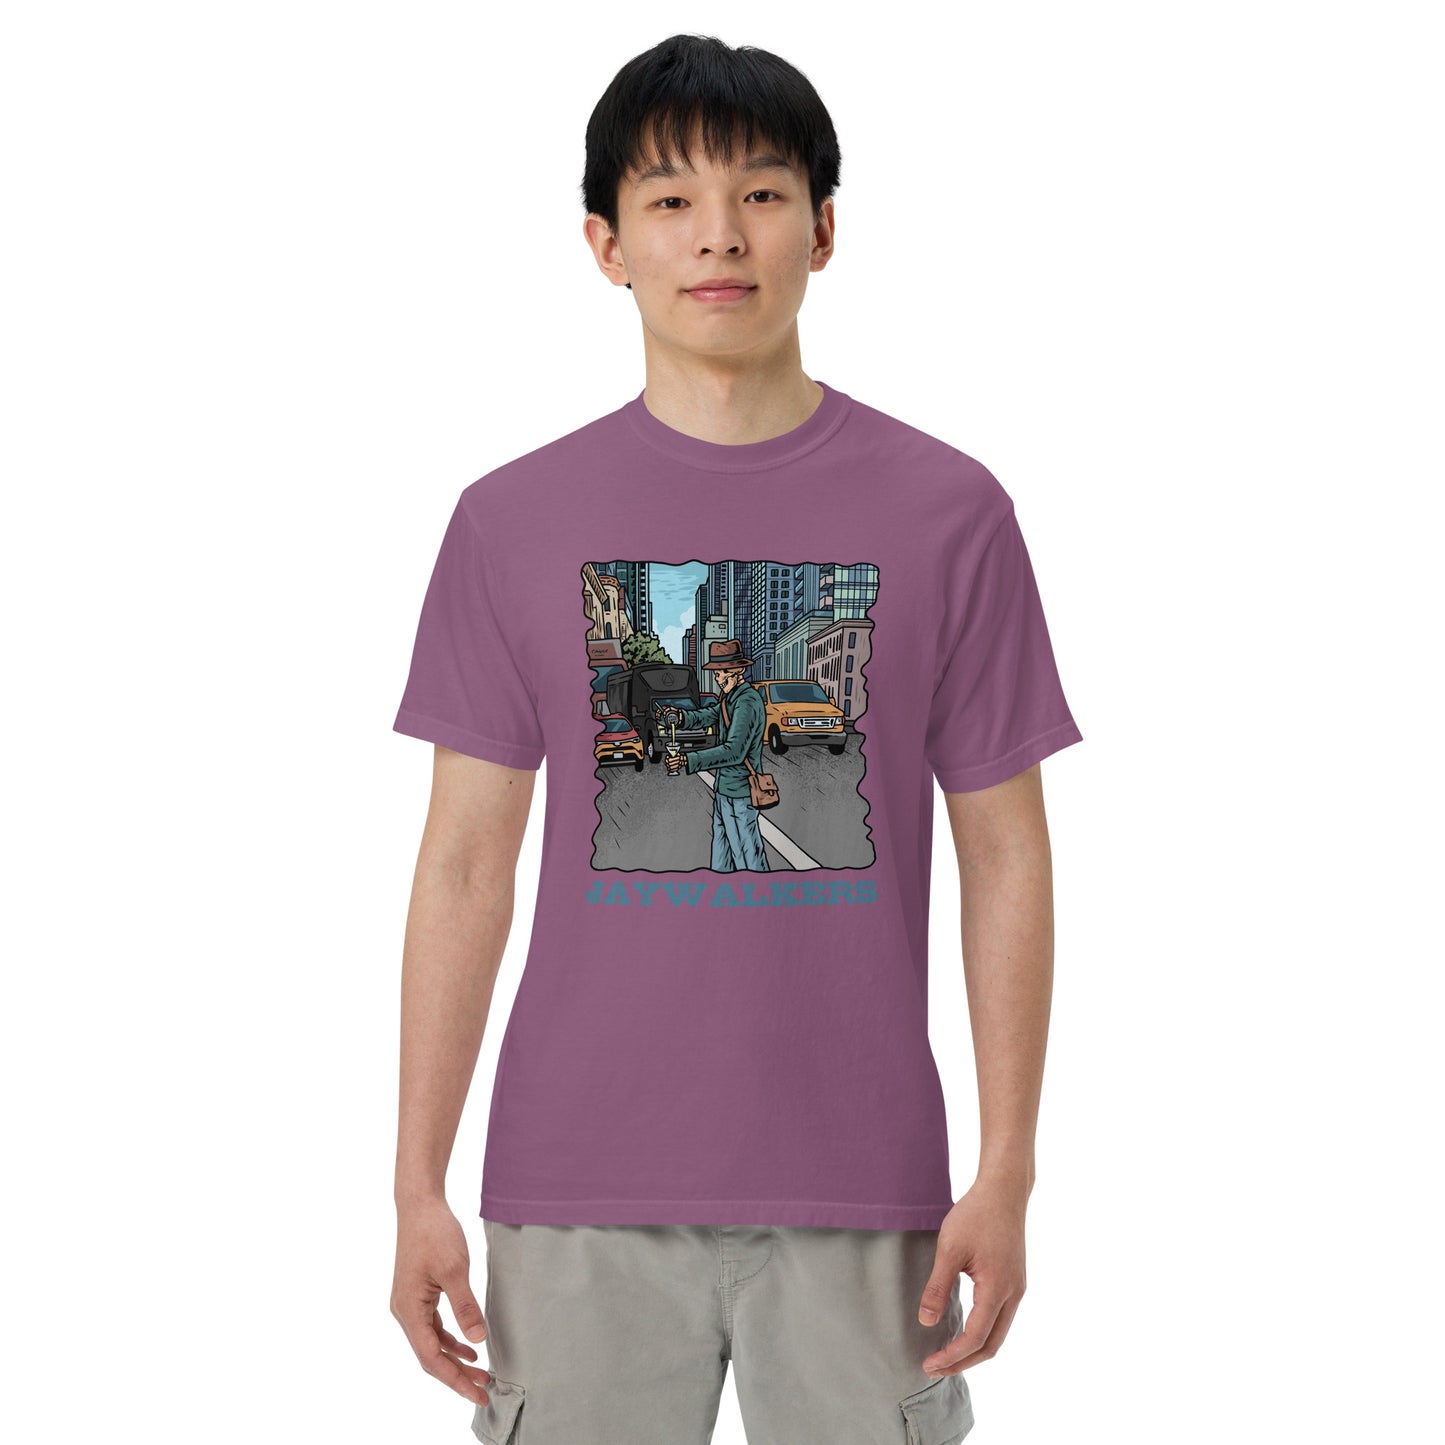 Jaywalker’s T-shirt